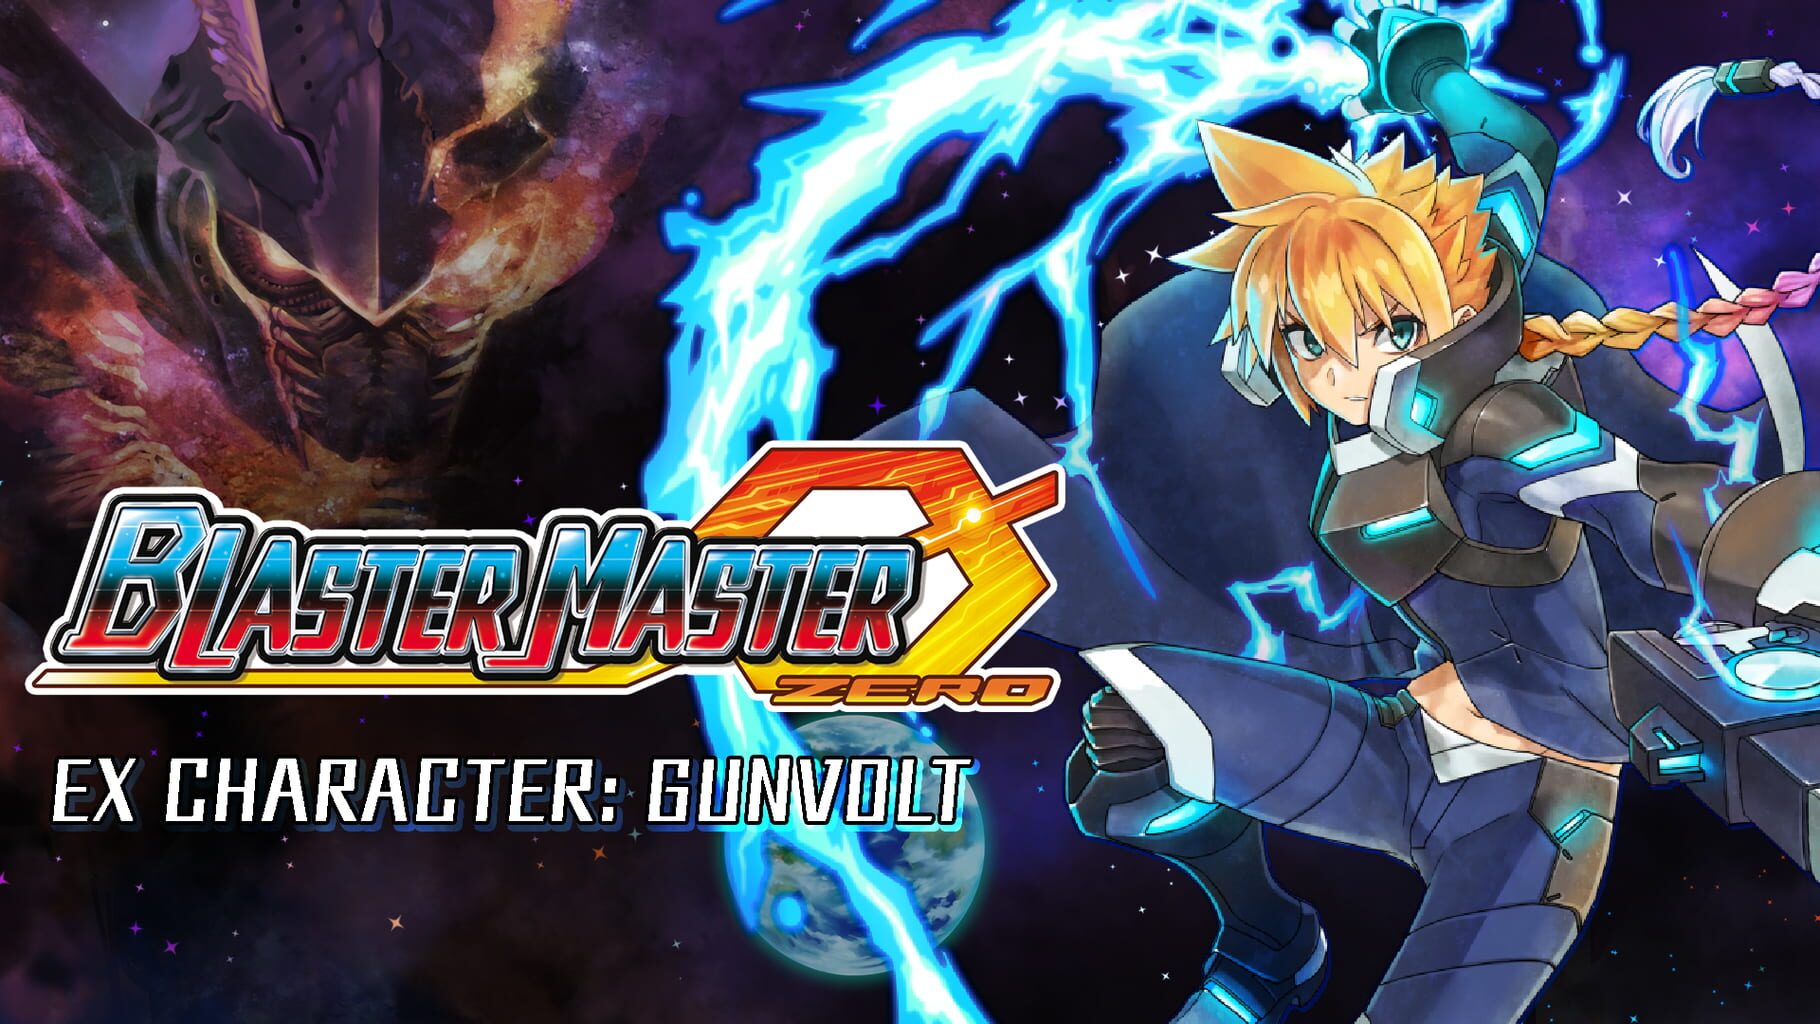 Blaster Master Zero: Ex Character - Gunvolt artwork